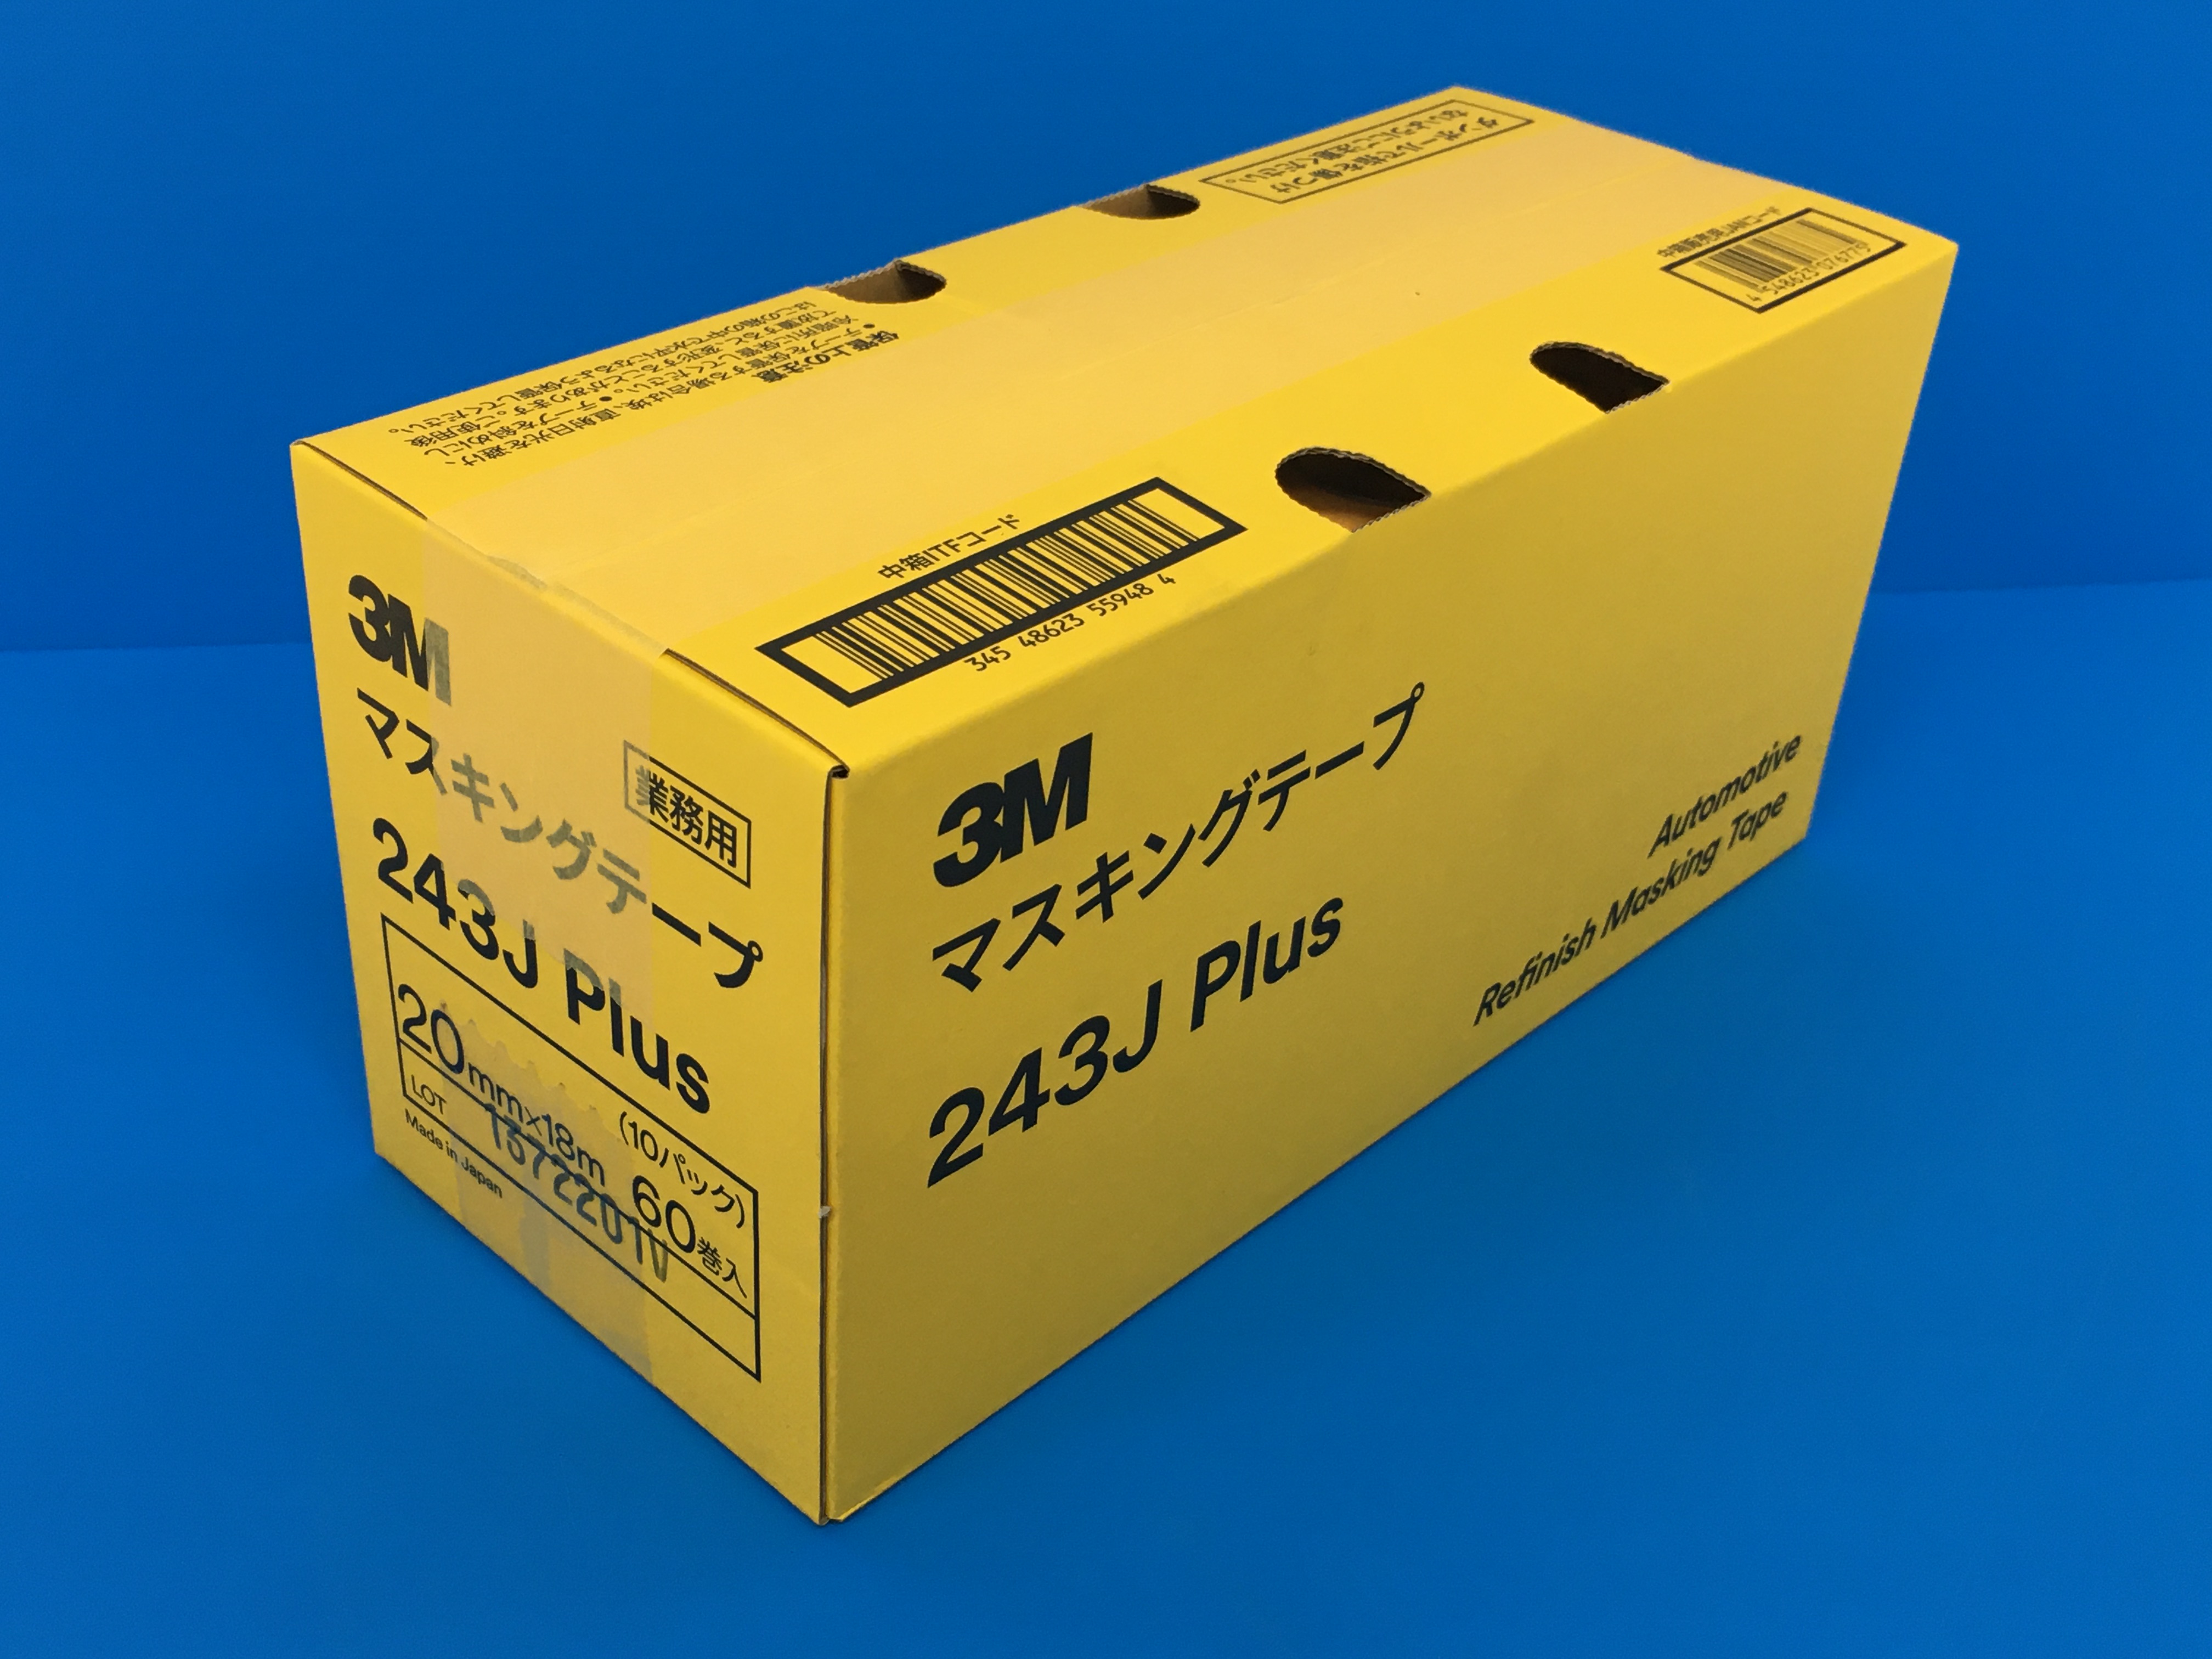 3M マスキングテープ 243J Plus 6mm 200巻*10箱 ケース販売 取寄 - 2